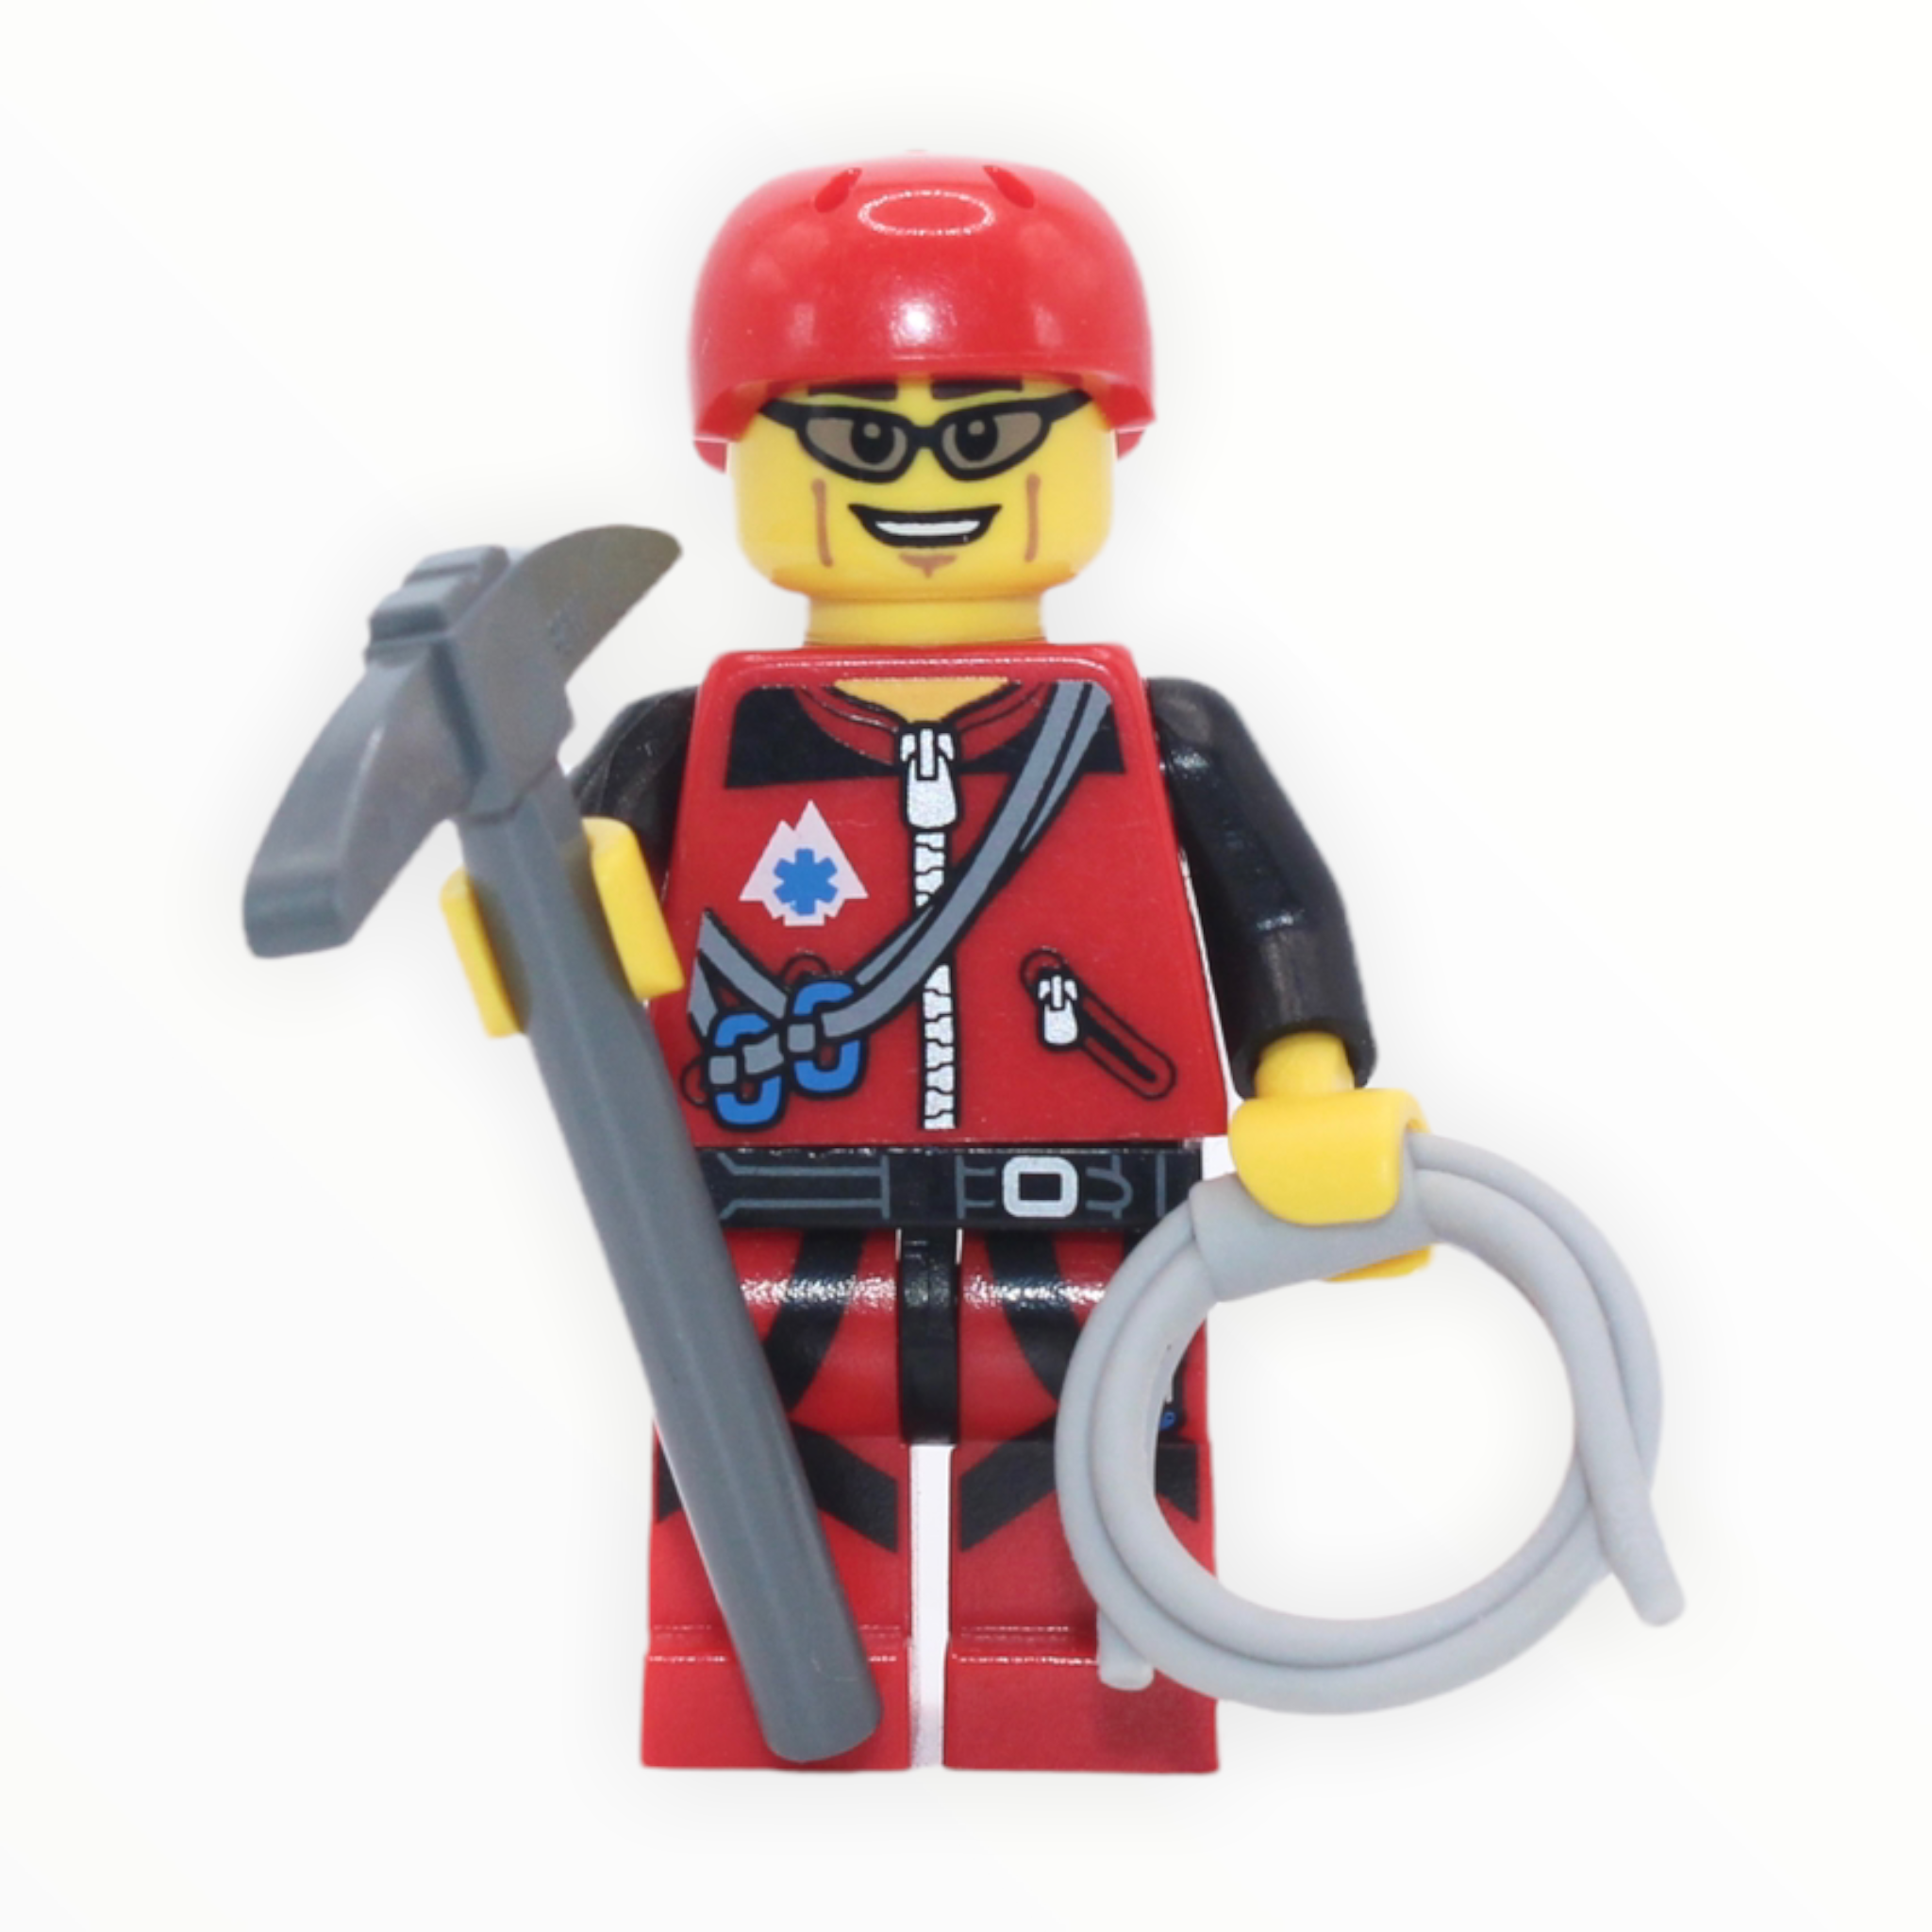 færge elektronisk adjektiv LEGO Series 11: Mountain Climber